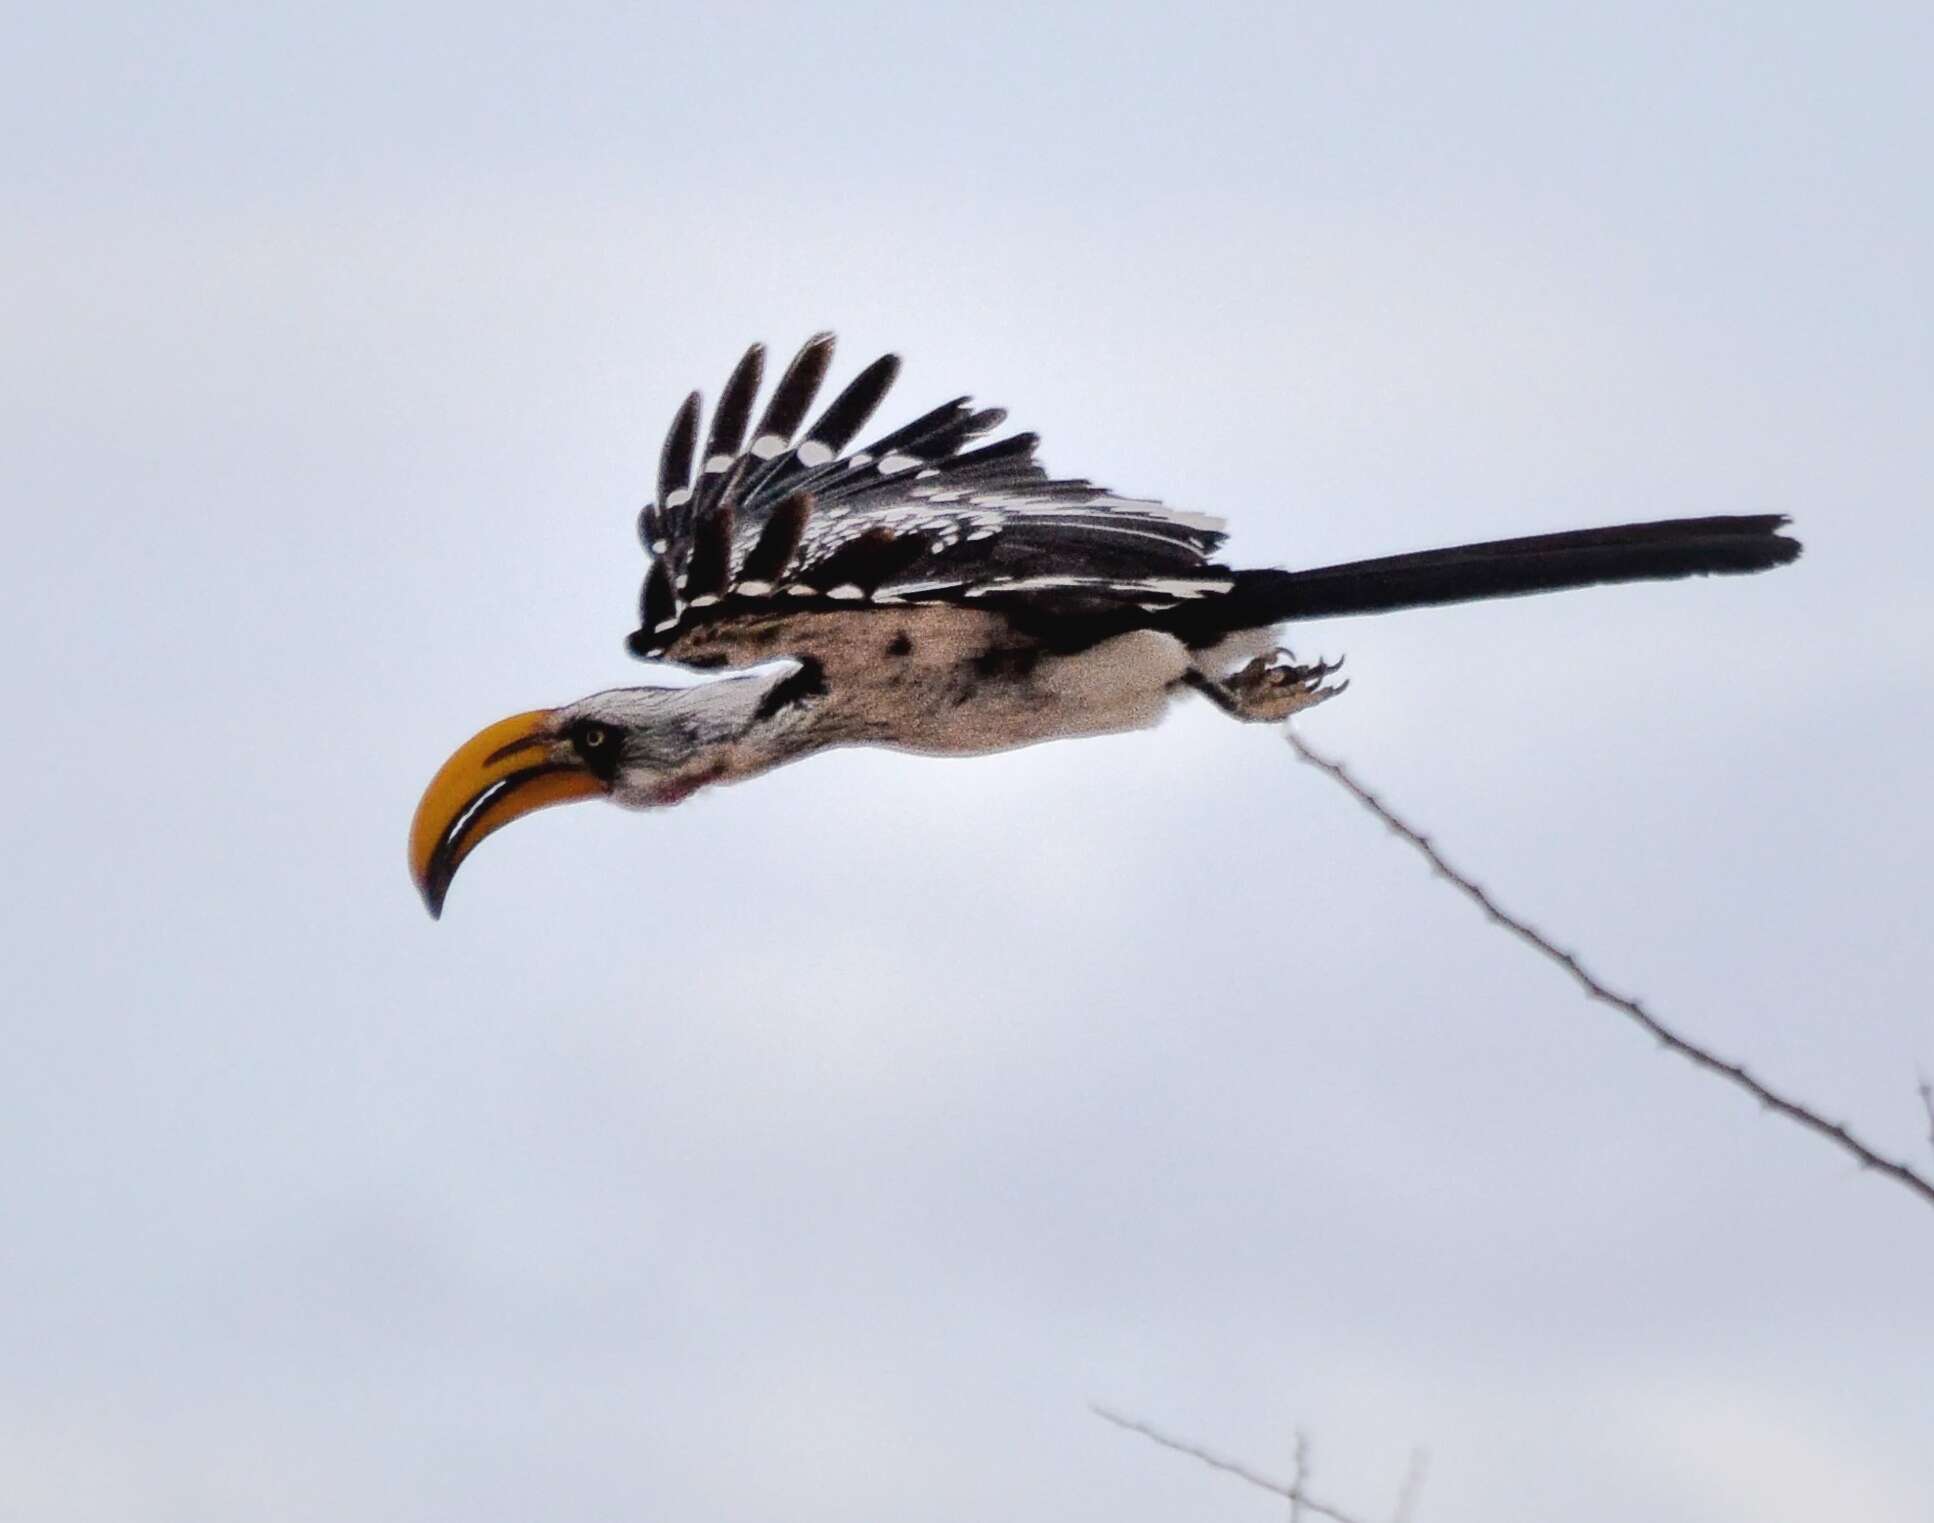 Image of Eastern Yellow-billed Hornbill